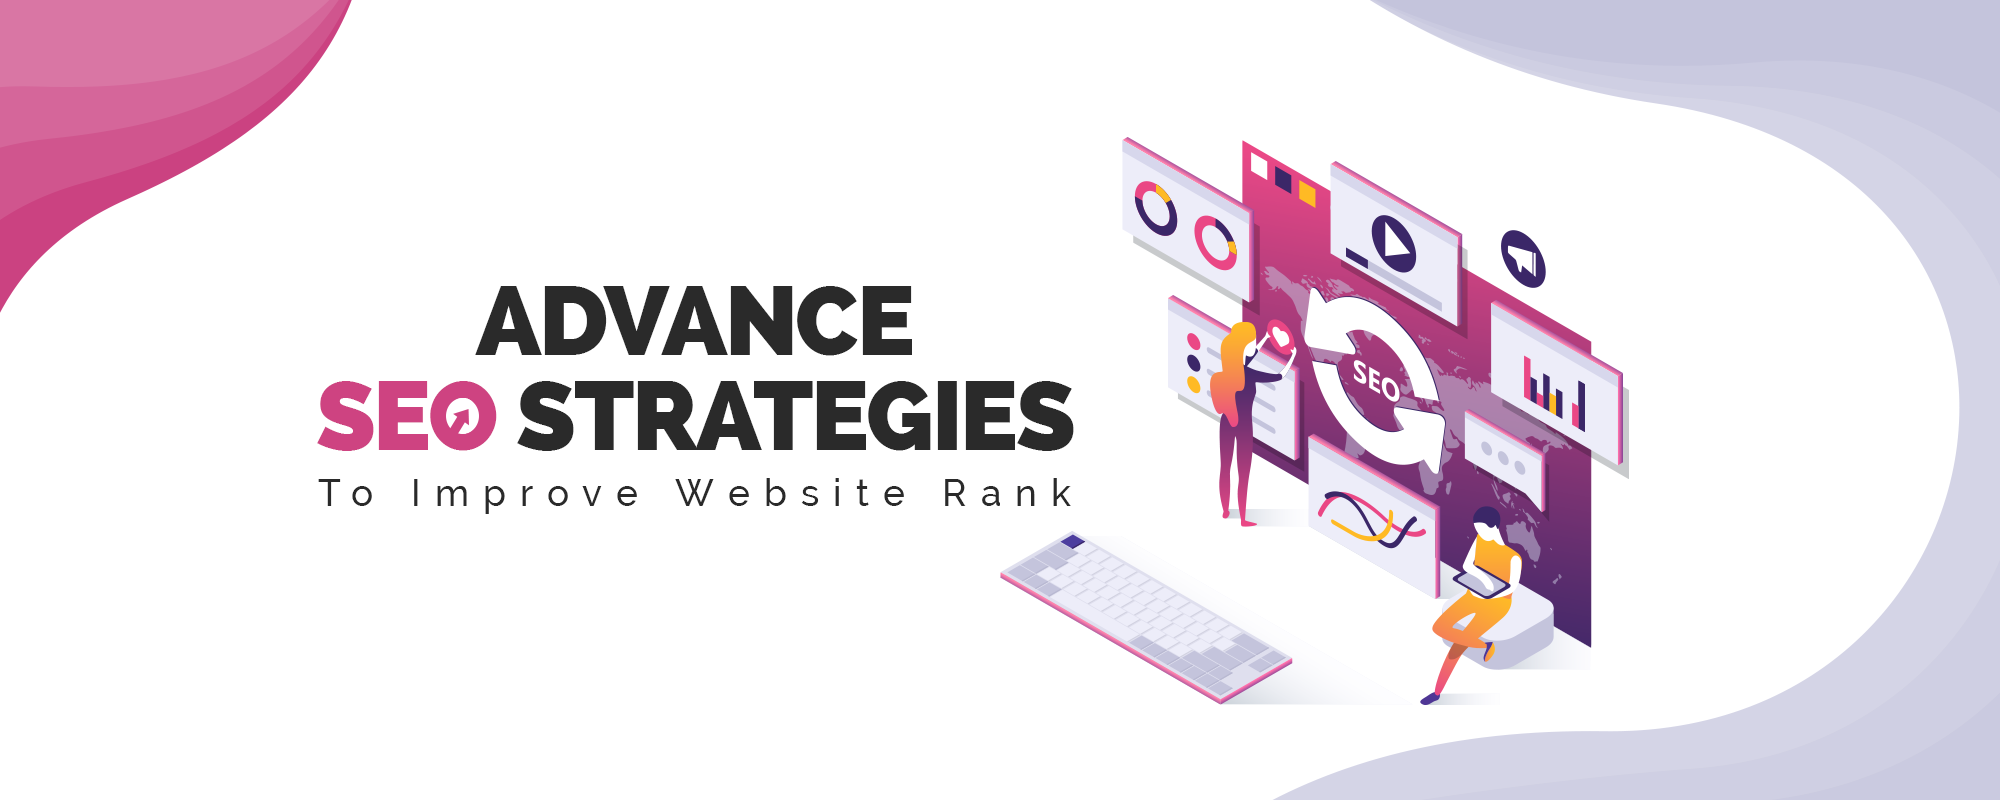 10 Advanced SEO Strategies to Improve Website Rank